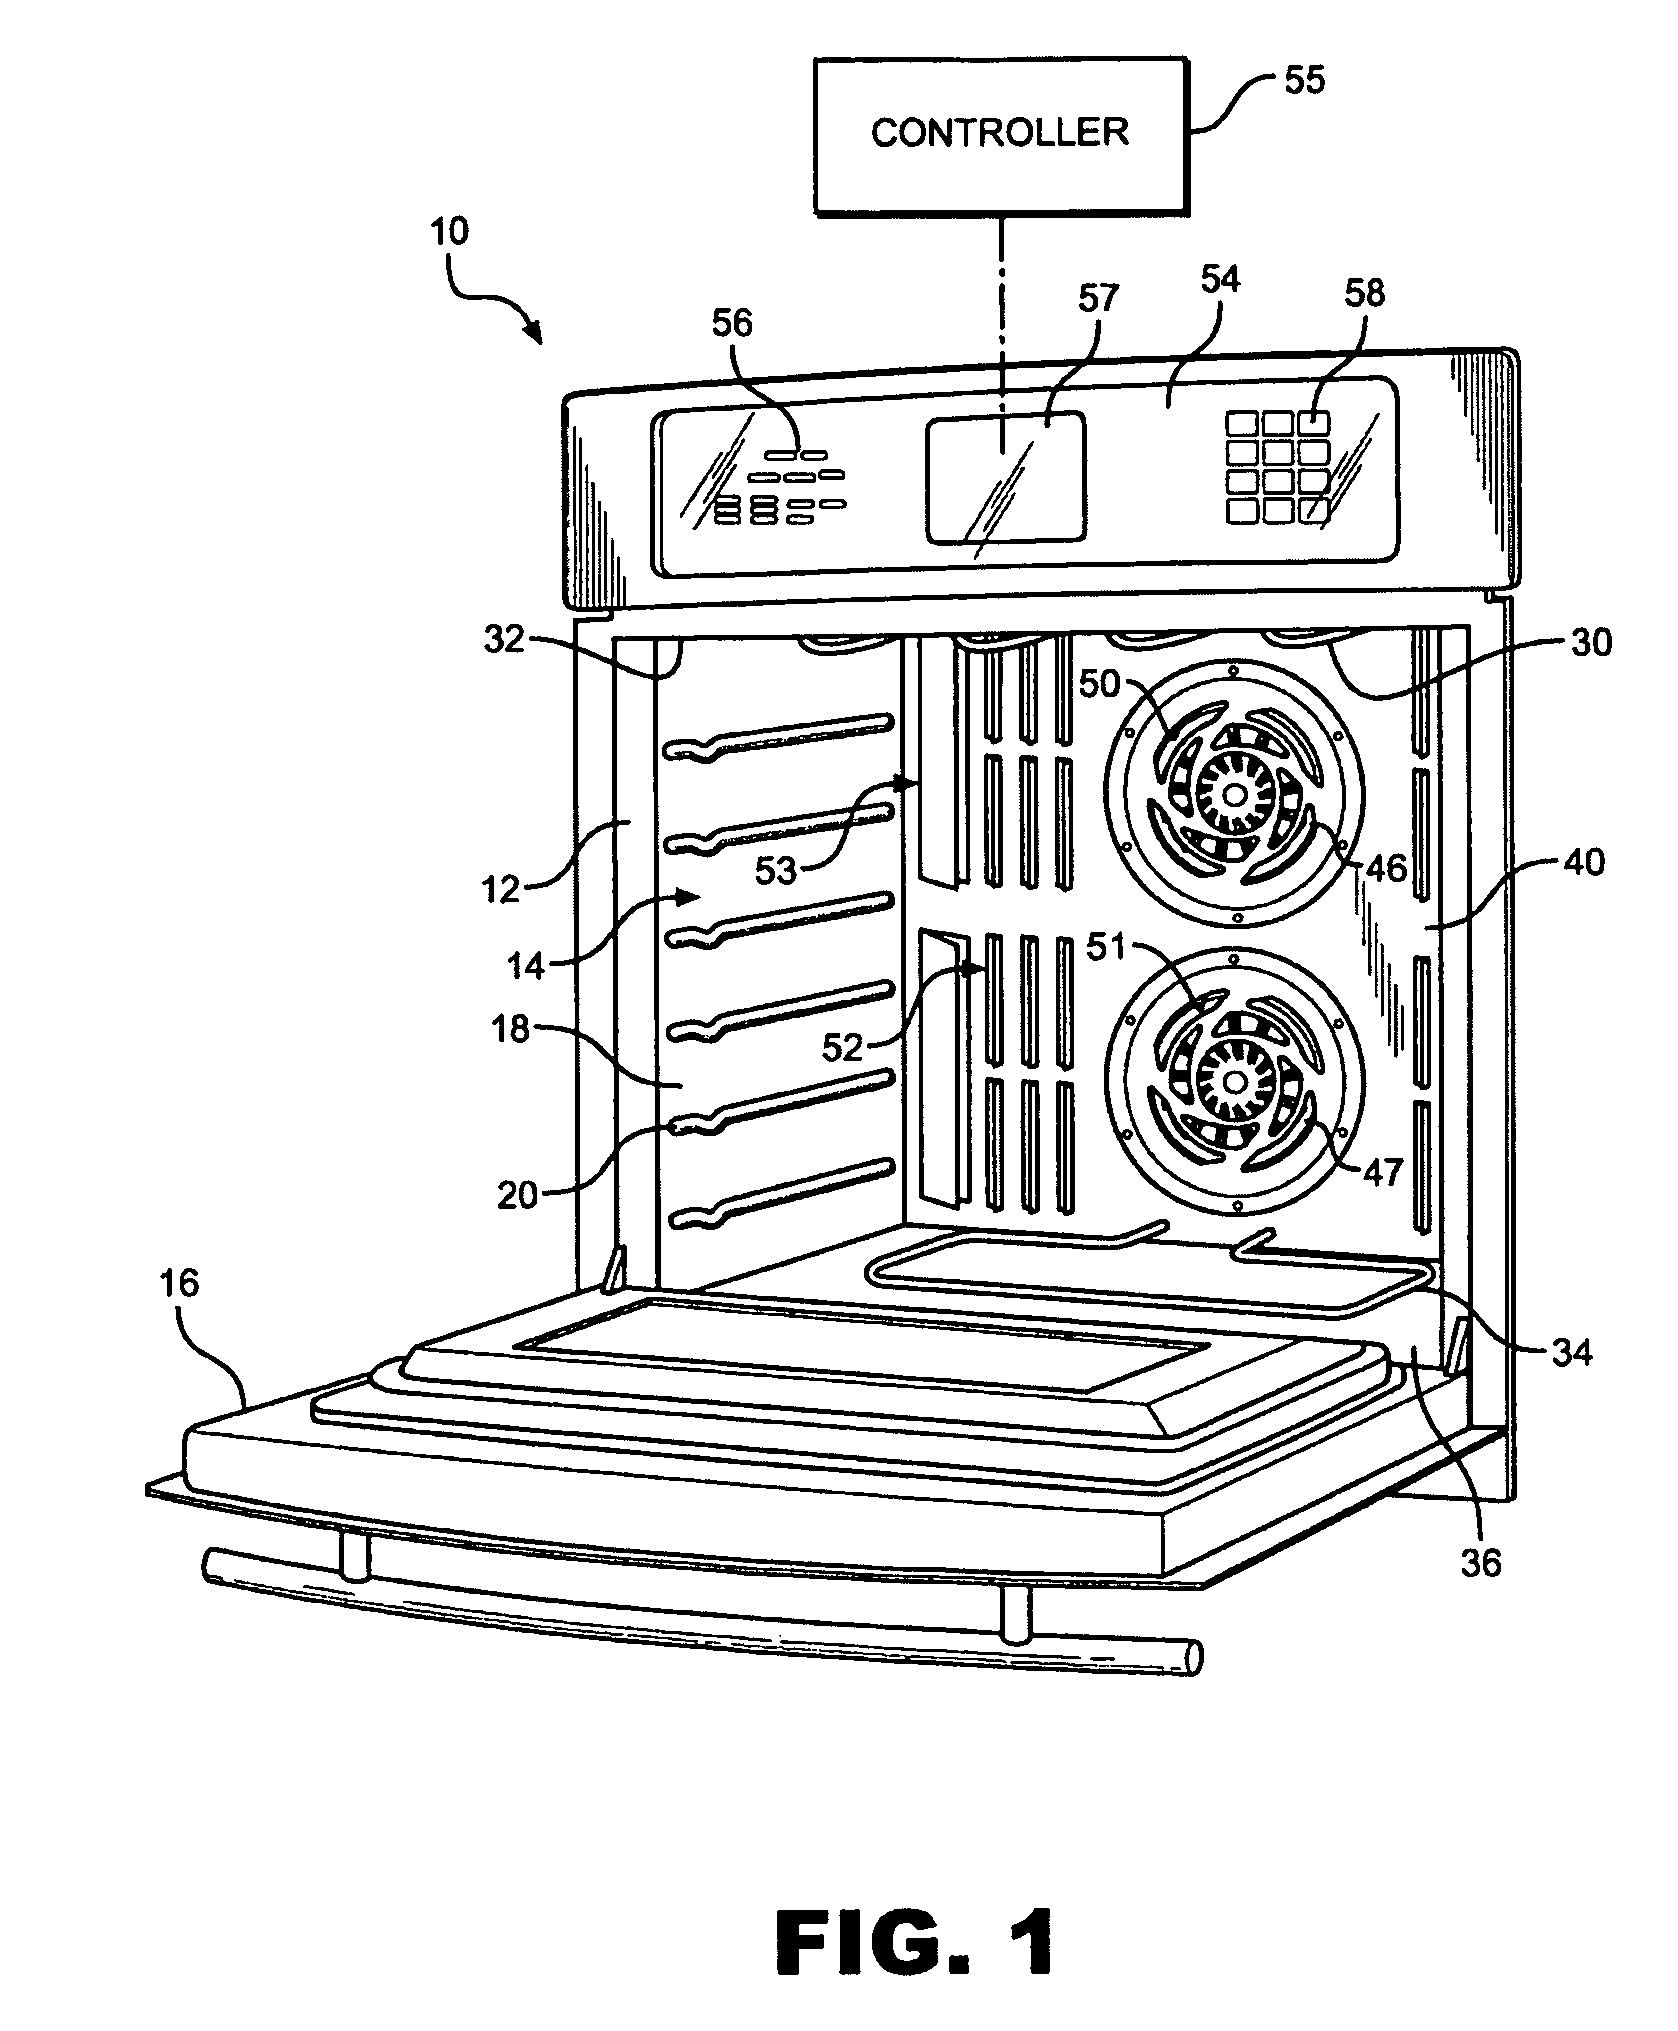 Dual fan convection oven